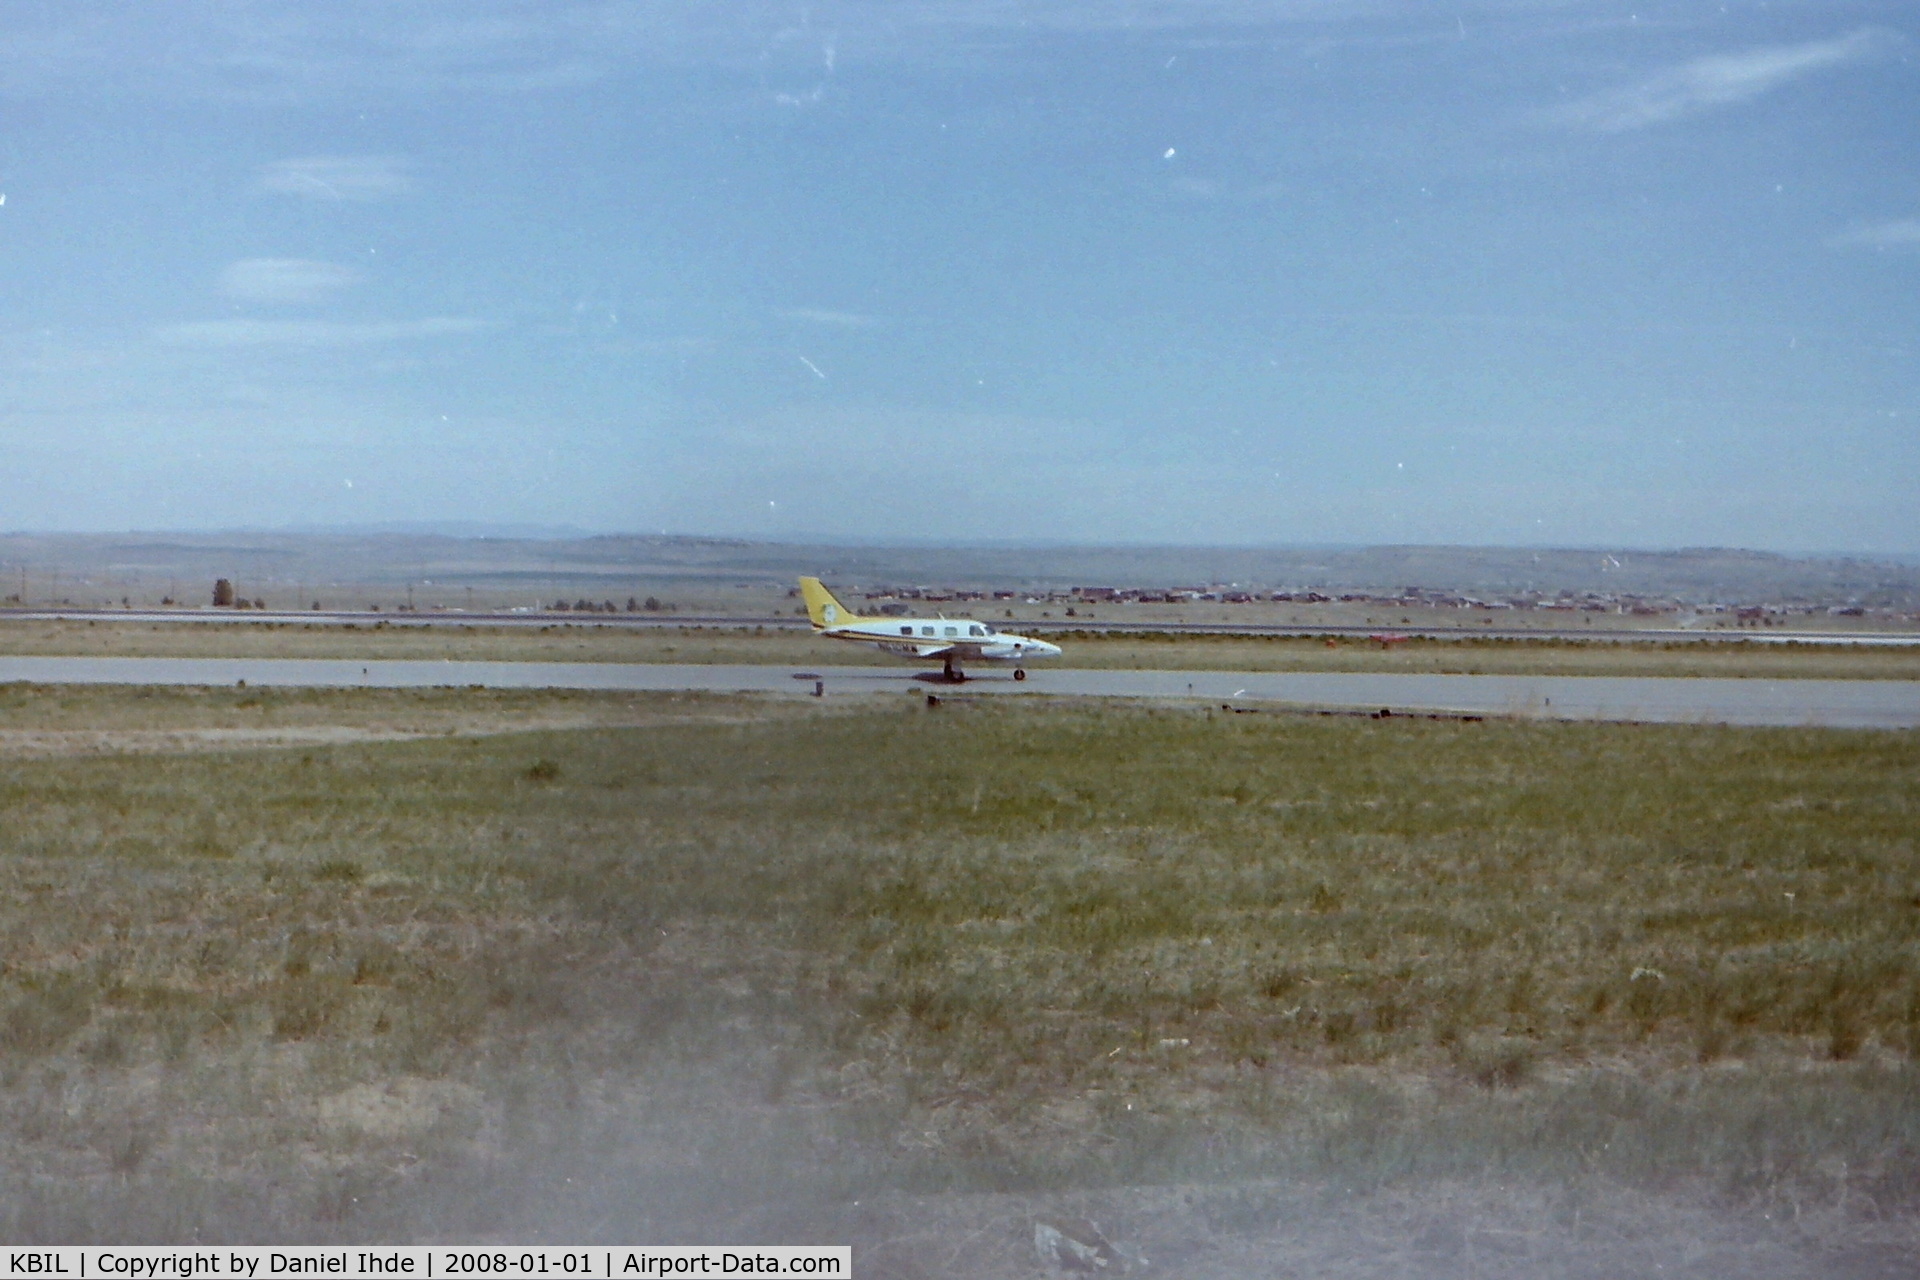 Billings Logan International Airport (BIL) - N610MN (scarcely legible) taxies to runway 27R in June of 1981 at Billings Logan Airport.